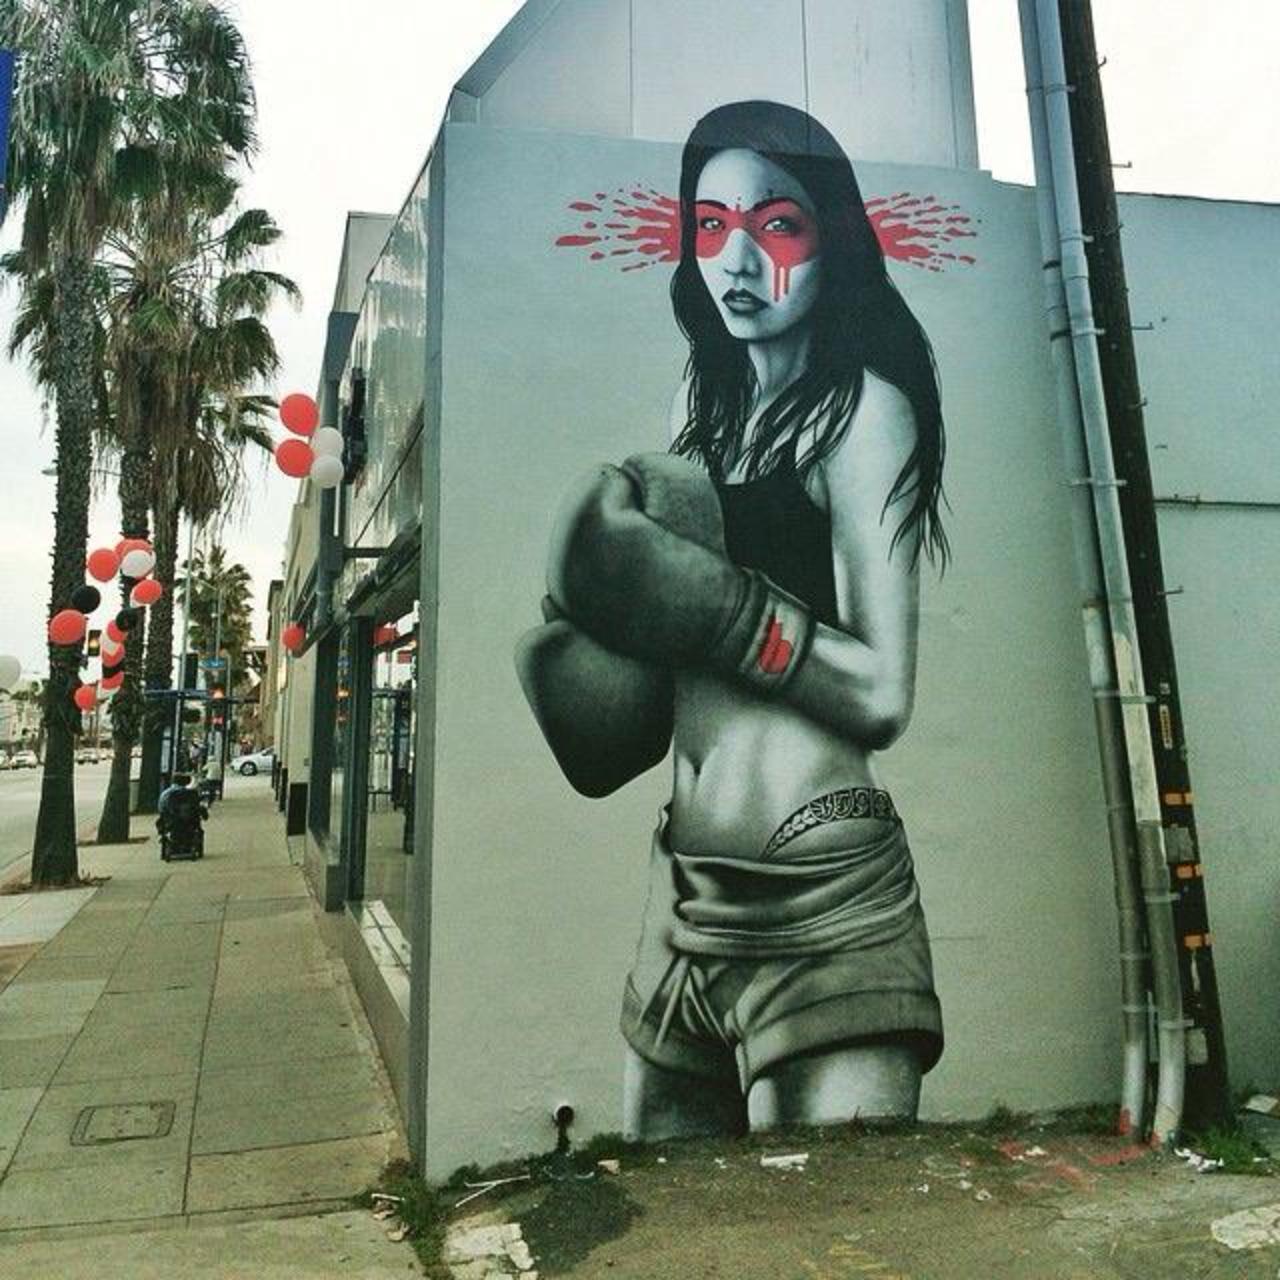 New Street Art by the artist FinDac in Santa Monica, CA 

#art #arte #graffiti #streetart http://t.co/kJ5mO6fscn